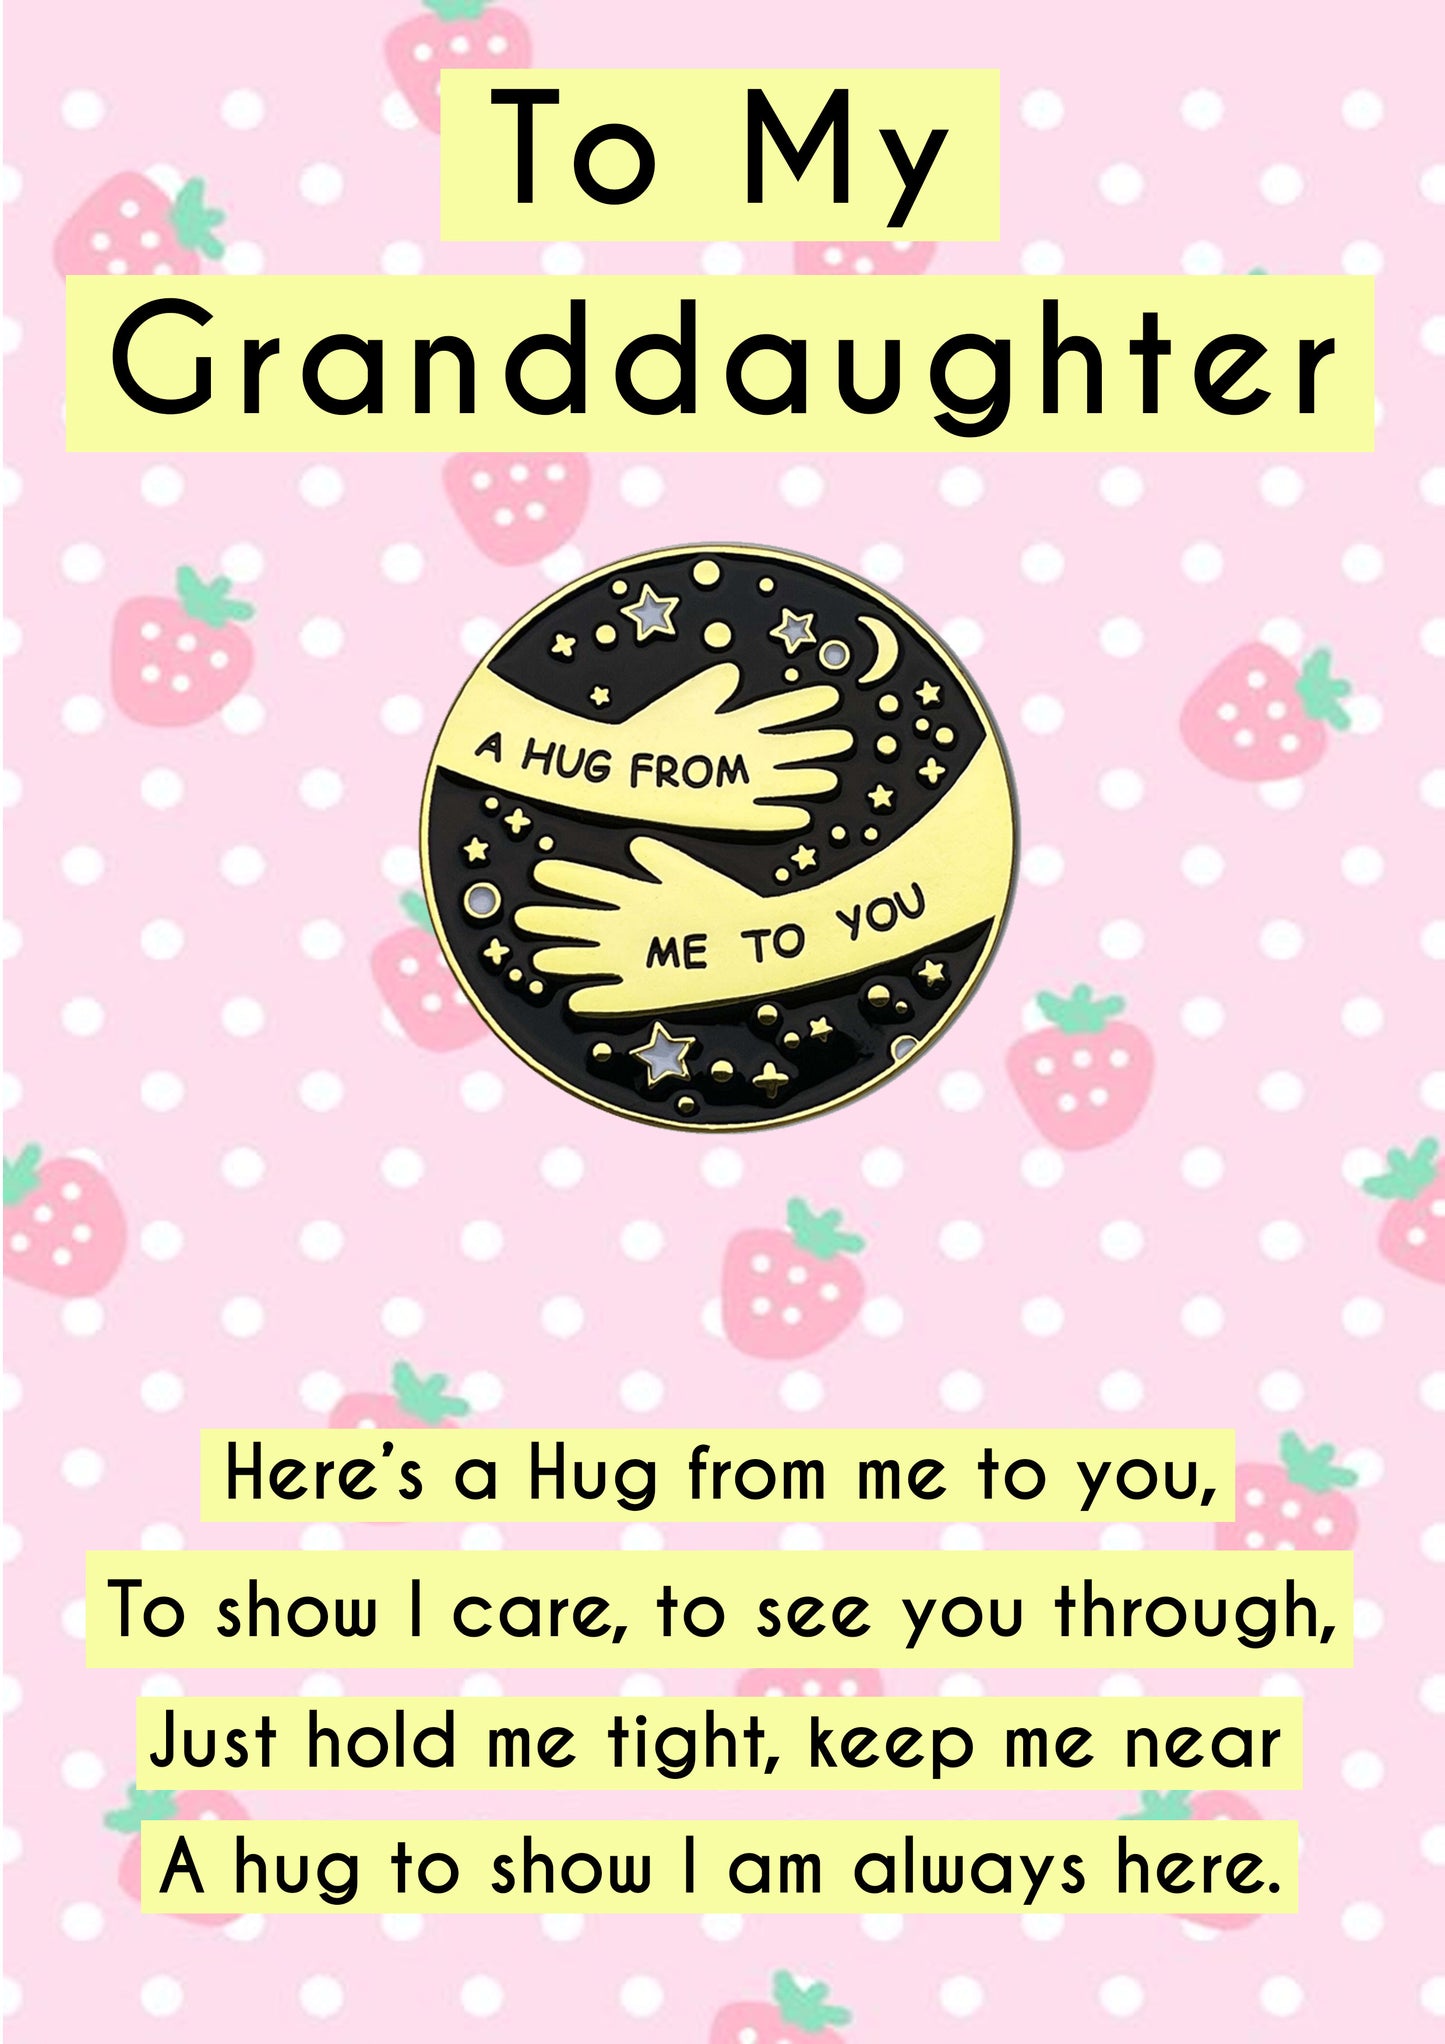 Granddaughter Pocket Hug Pin Badges & Cute Strawberry Message Cards